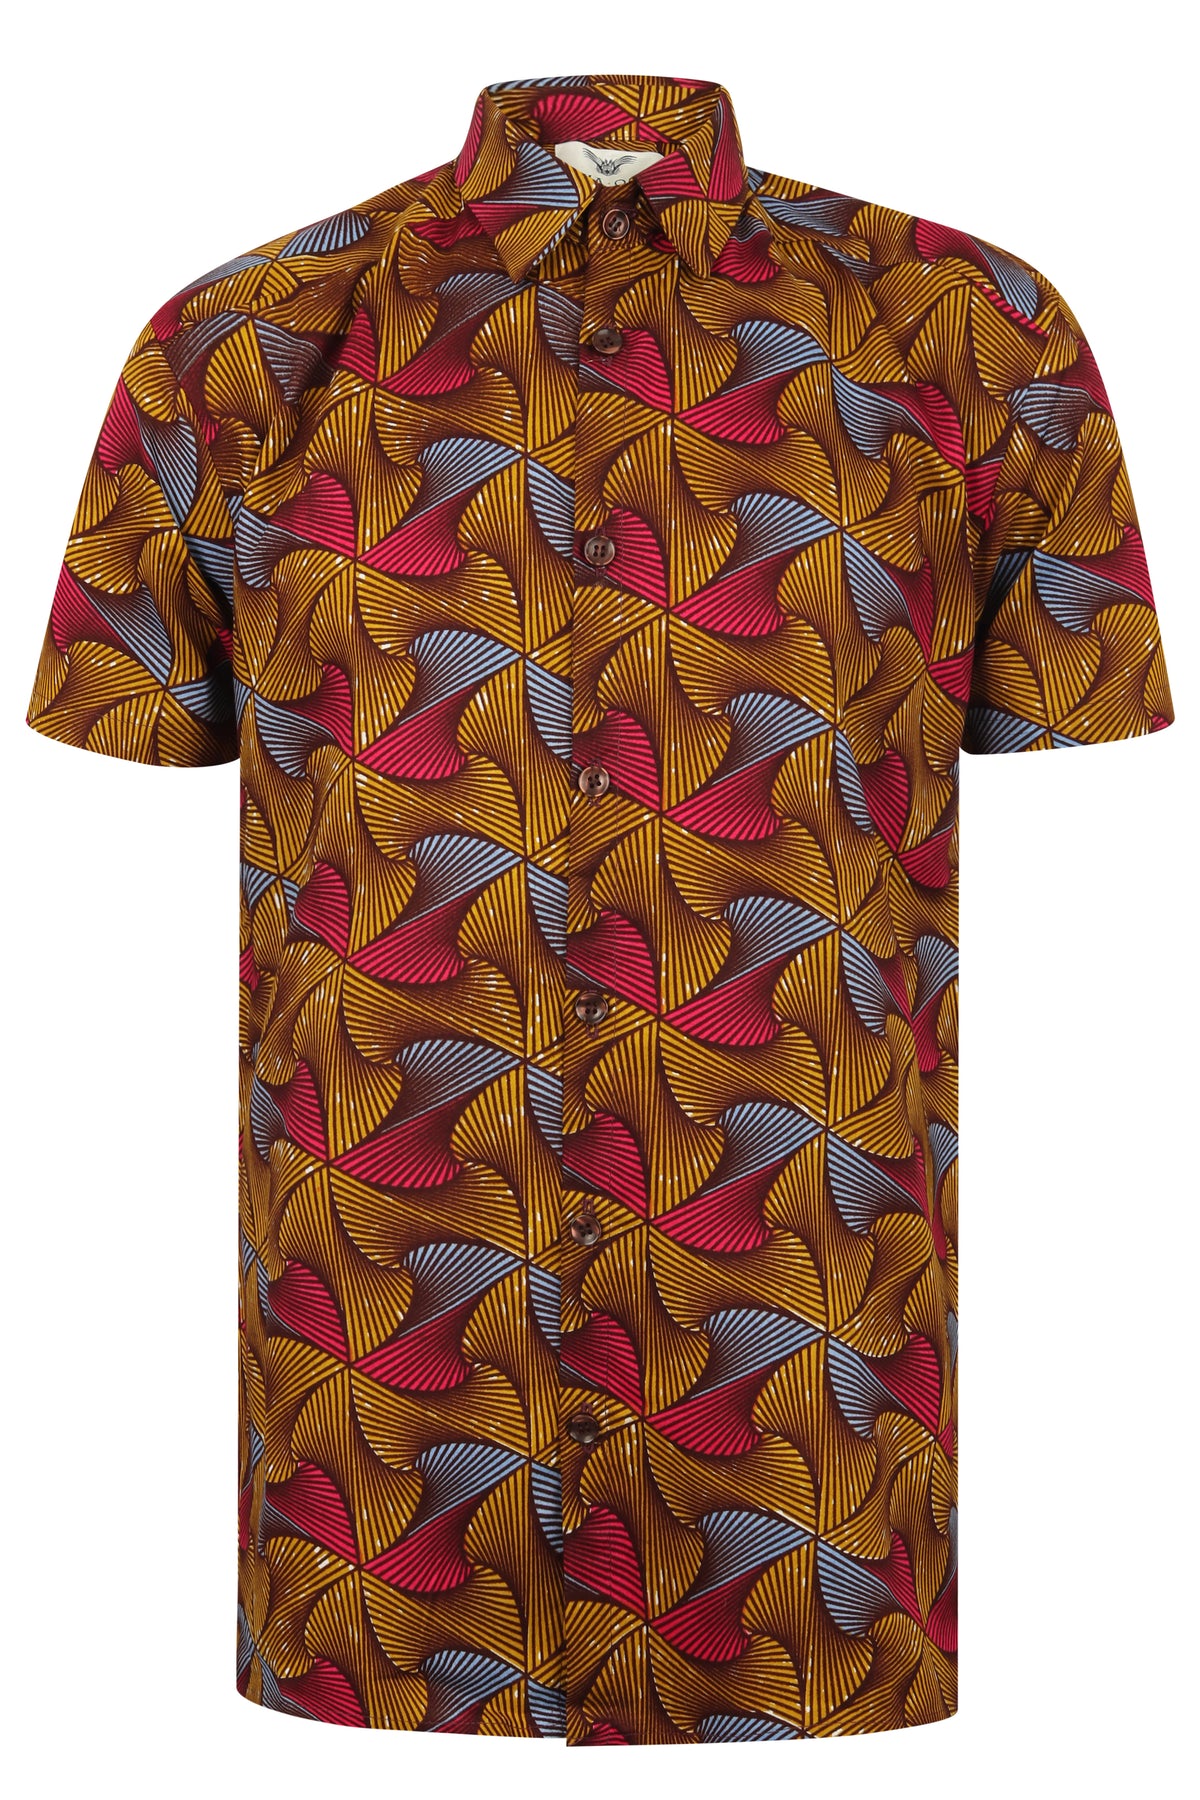 Men's SS African print shirt-Crossways - OHEMA OHENE AFRICAN INSPIRED FASHION